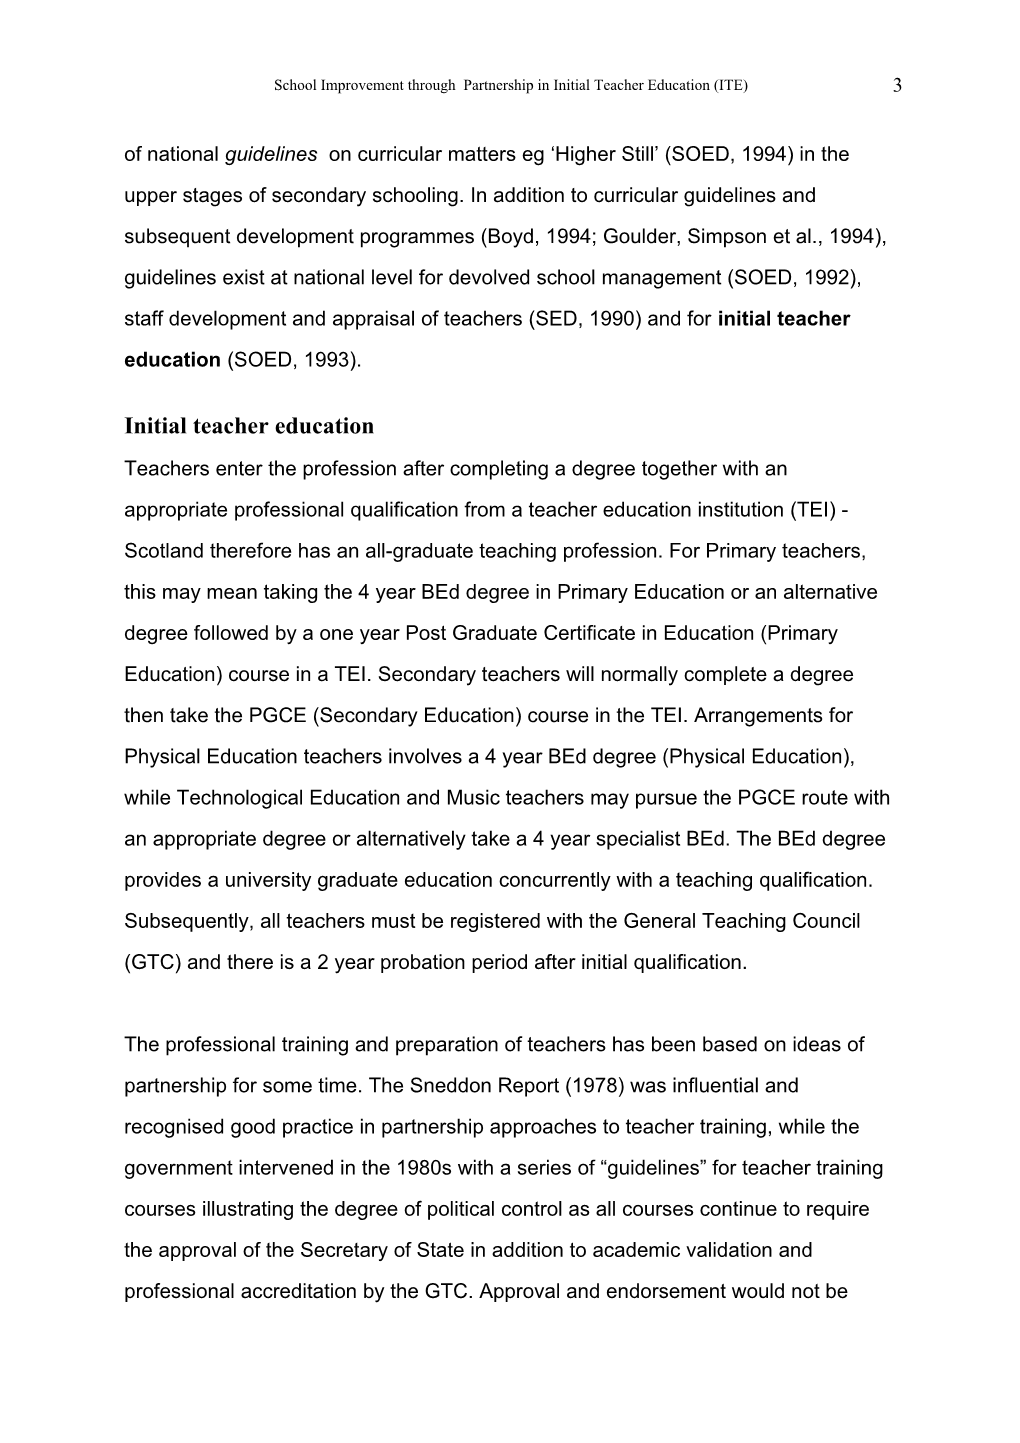 School Improvement Through Partnership in Initial Teacher Education (ITE)